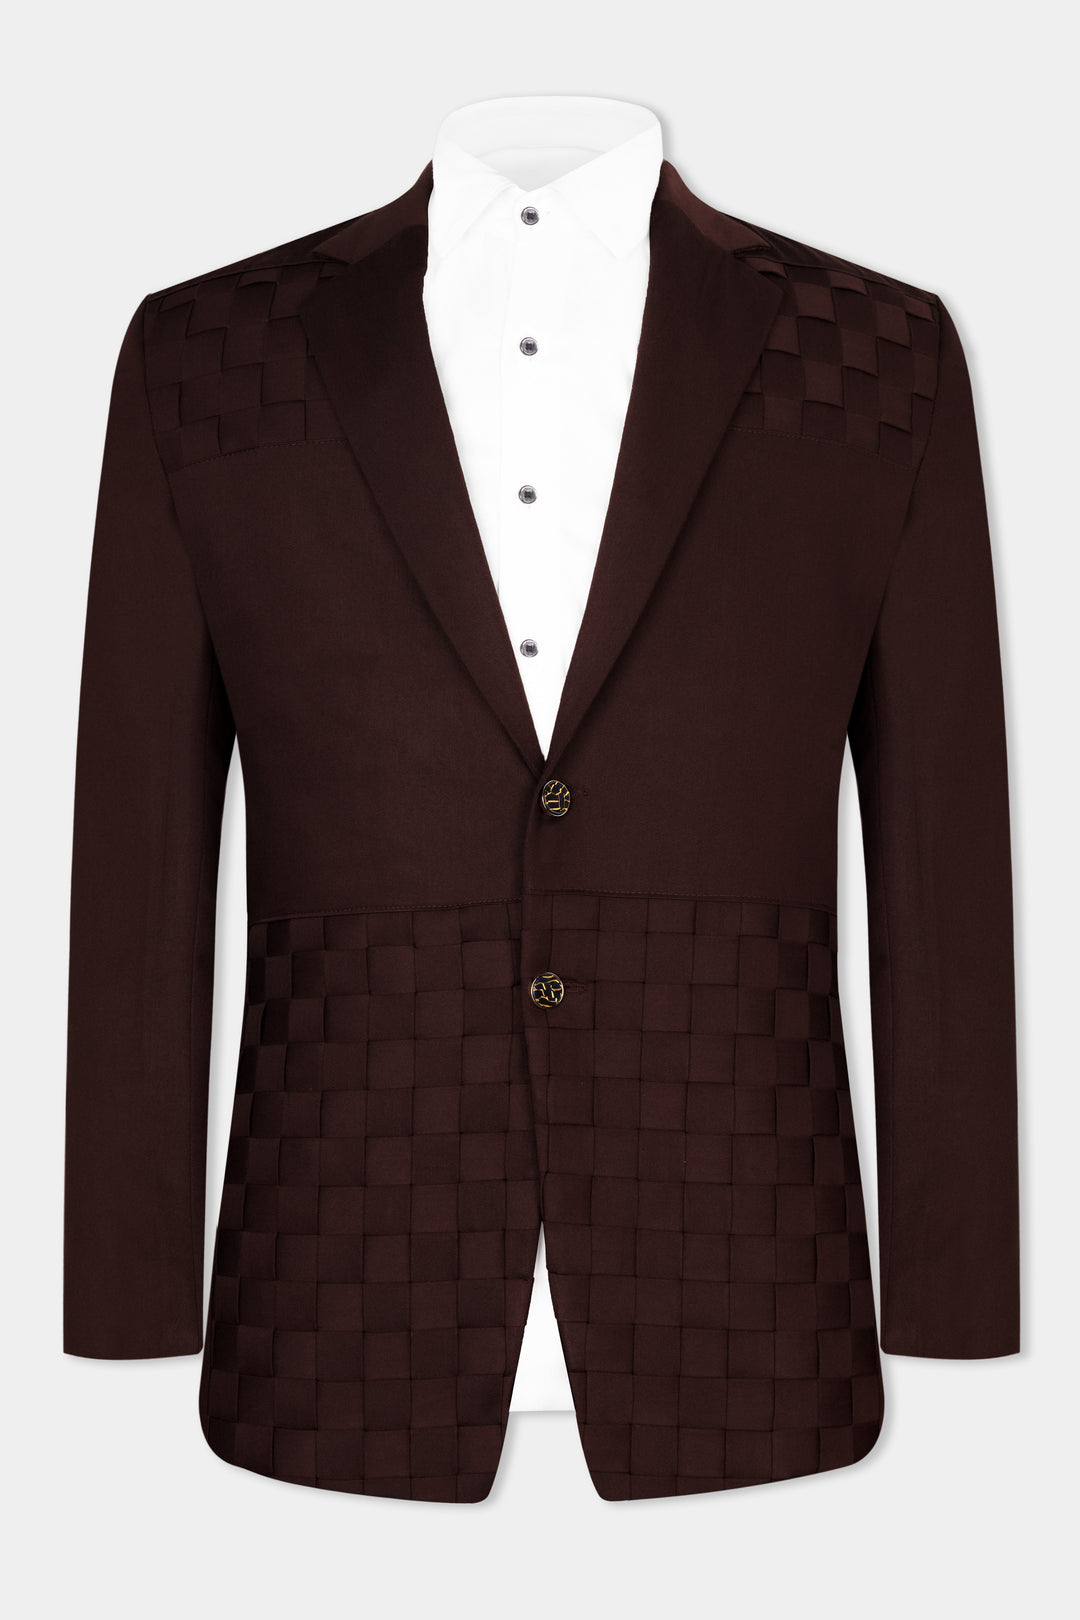 NEW FASHION] Louis Vuitton Black Brown Premium Luxury Brand T-Shirt Outfit  For Men Women